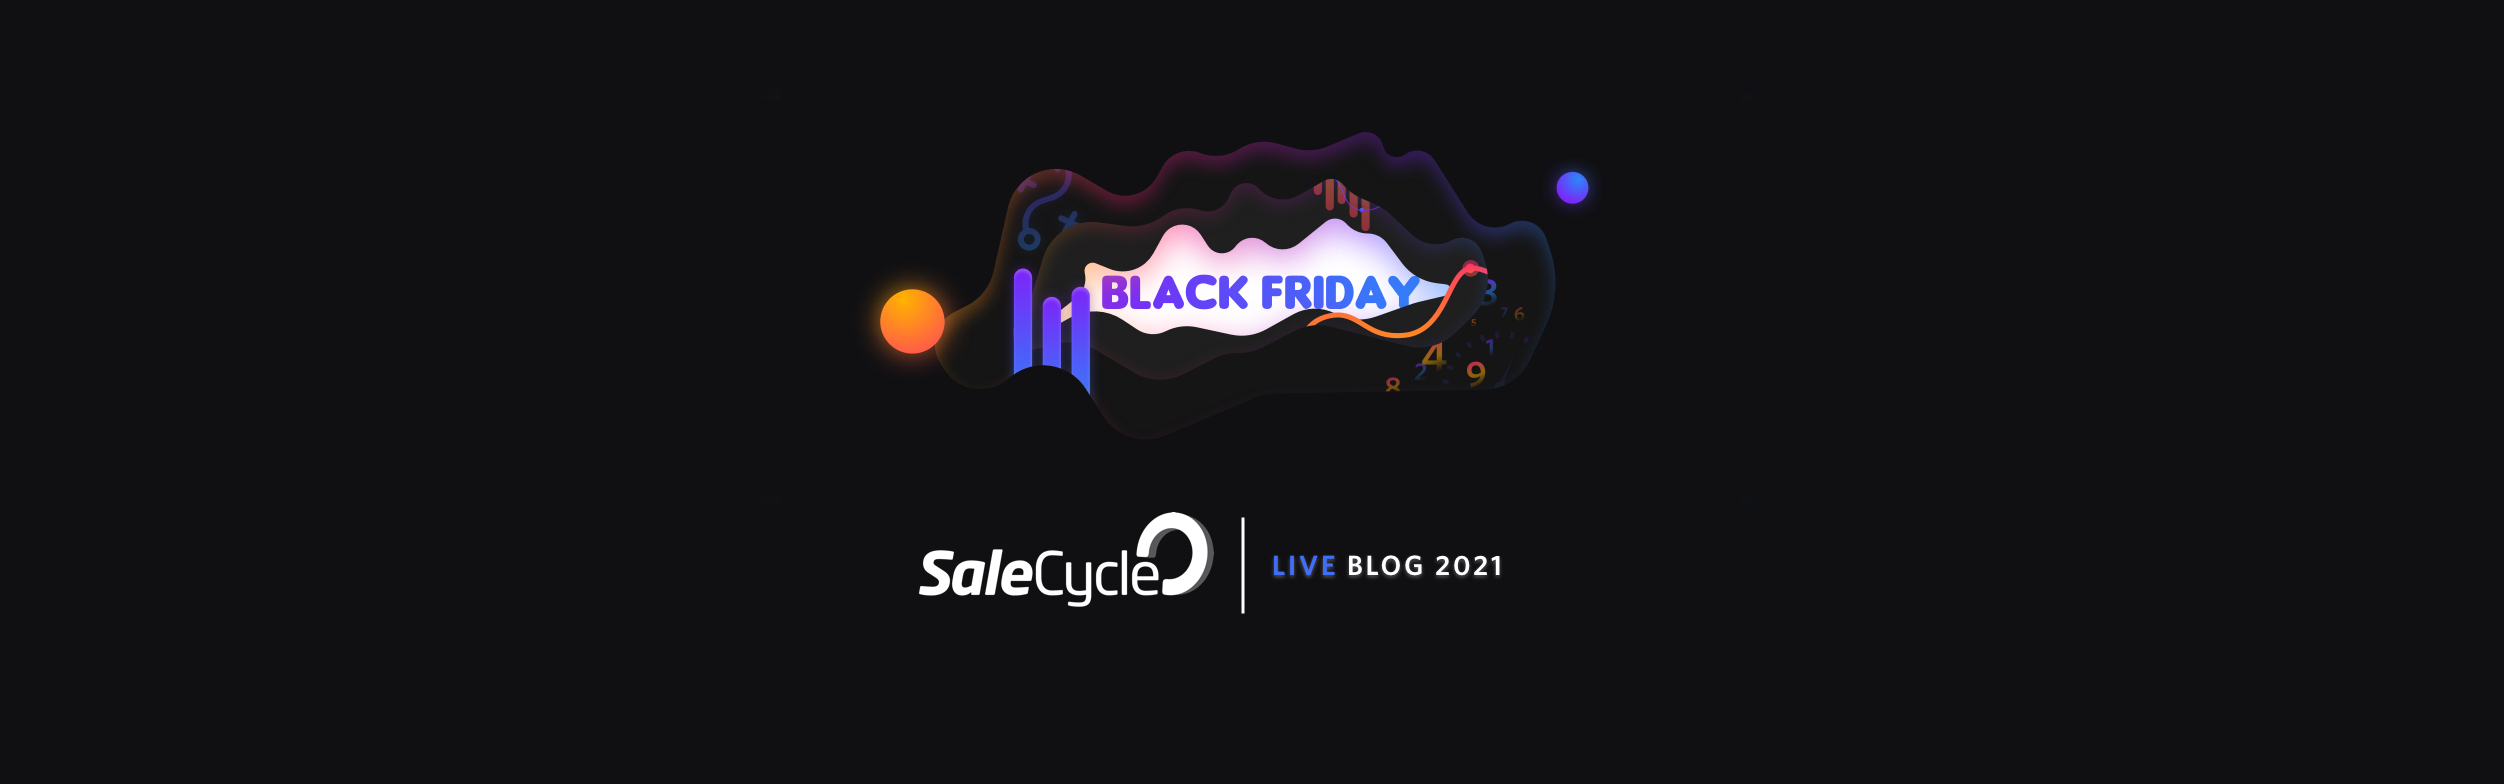 Live Blog sul Black Friday 2021